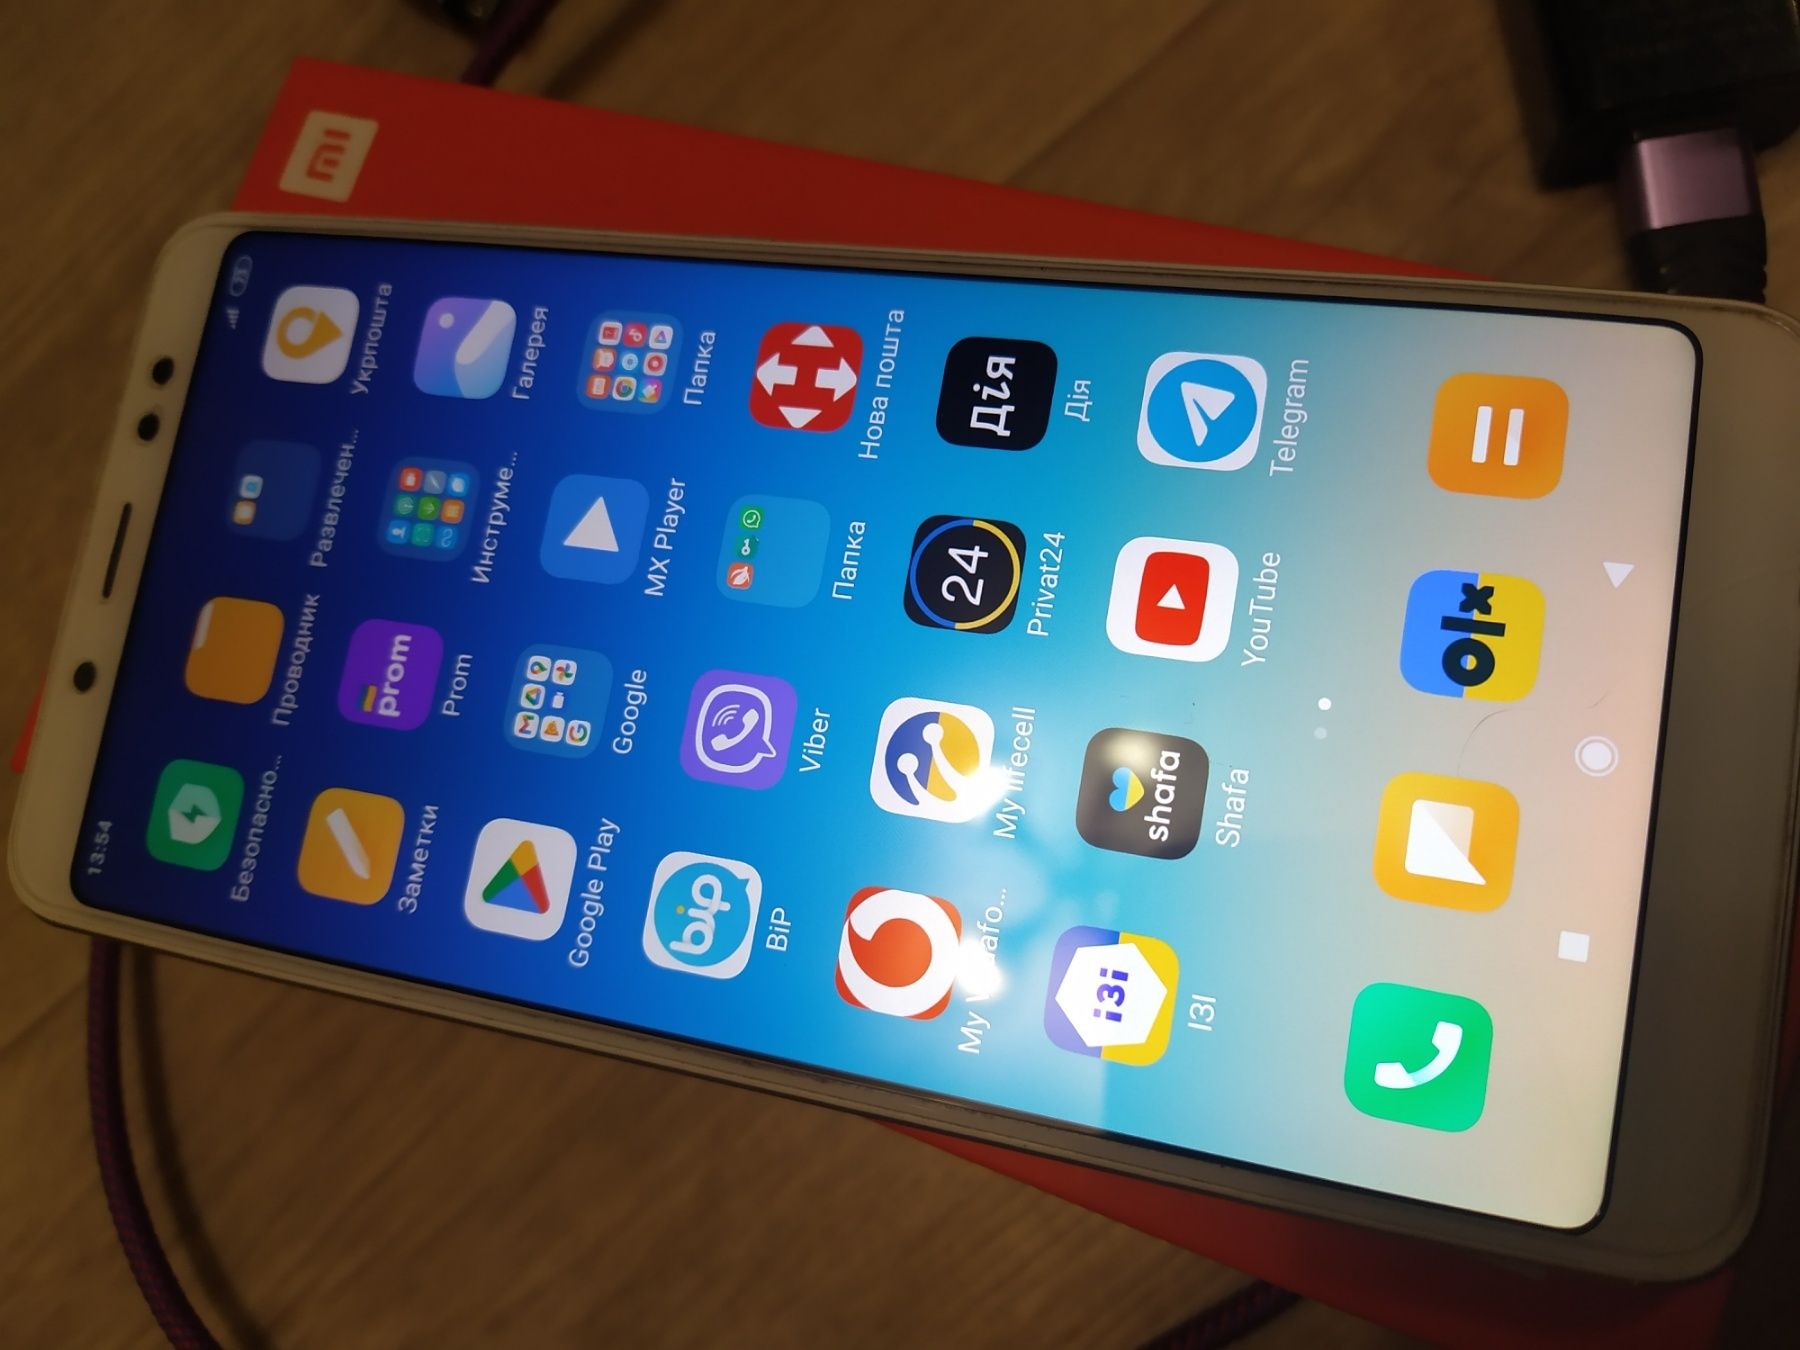 Телефон смартфон Xiaomi redmi note 5 7 8t 4 64 128 комплект скло ідеал